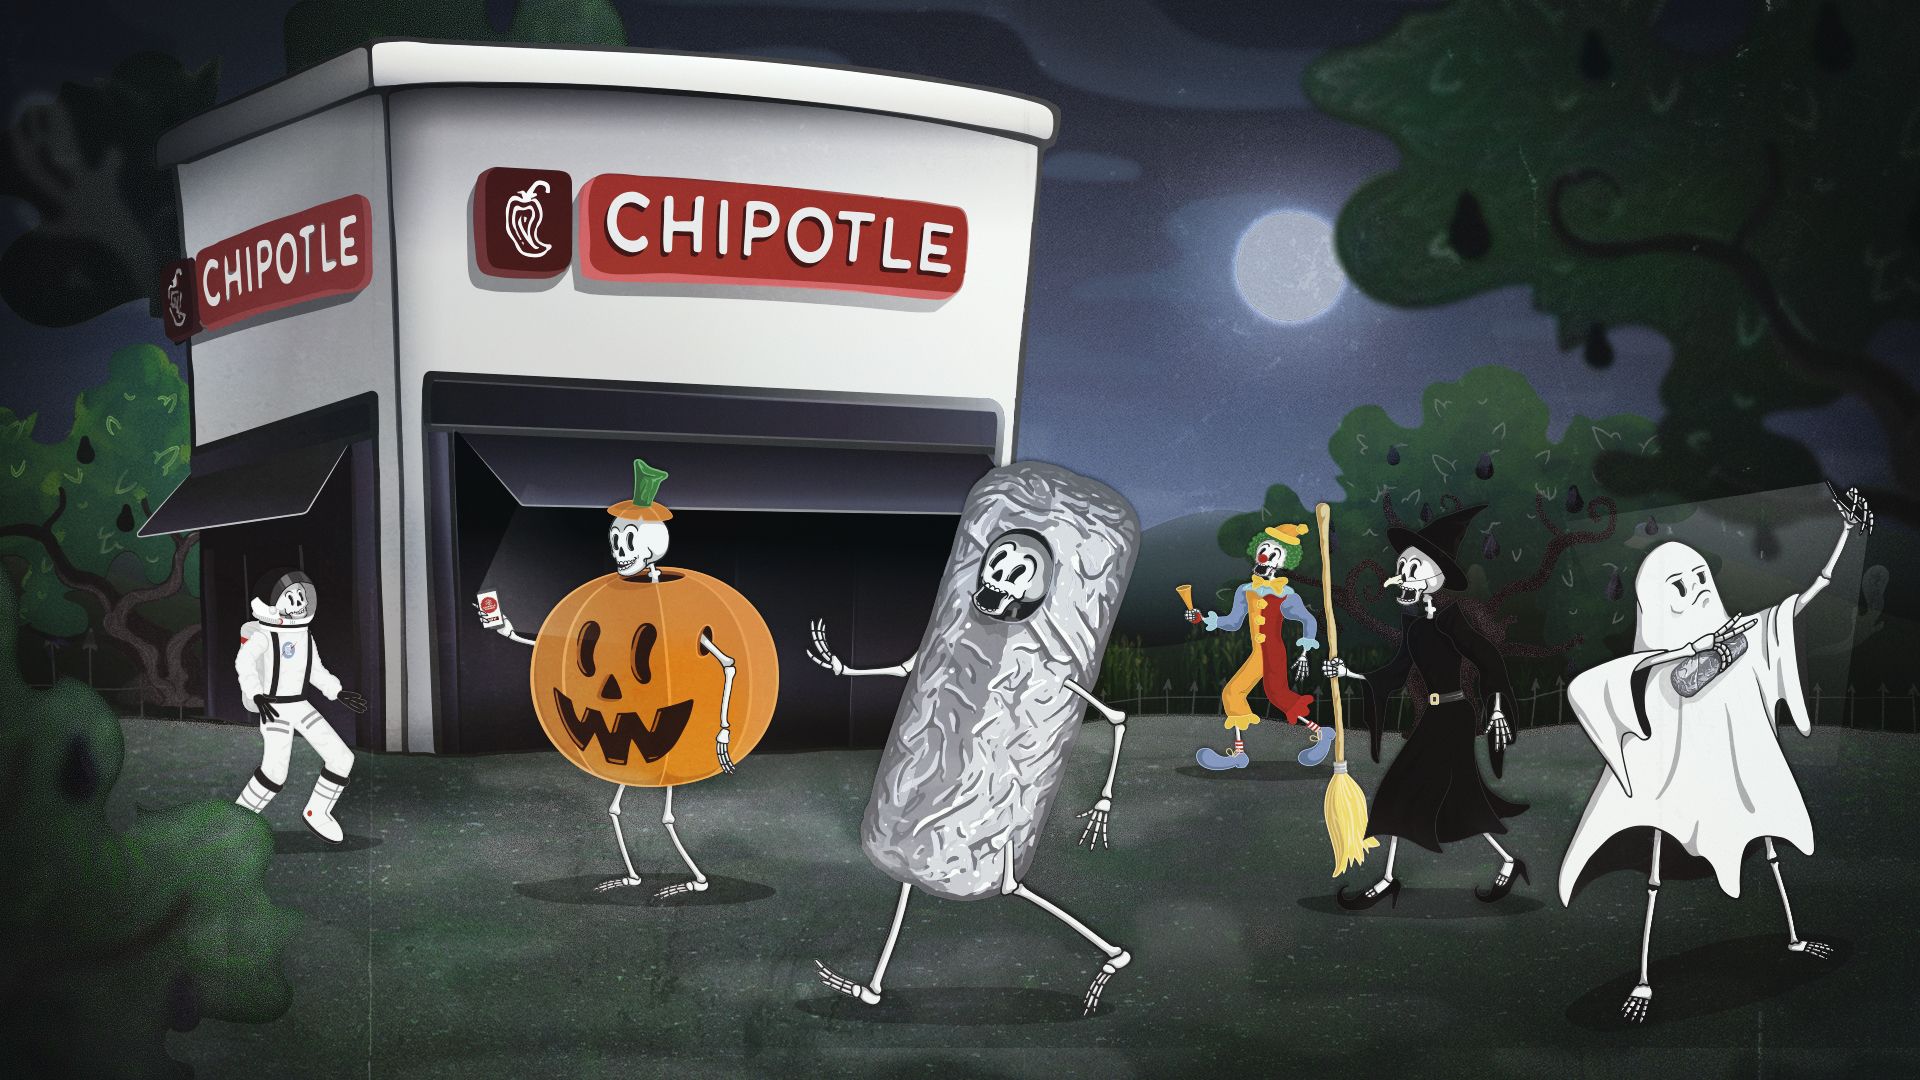 Cartoon Chipotle restaurant with cartoons wearing Halloween costumes